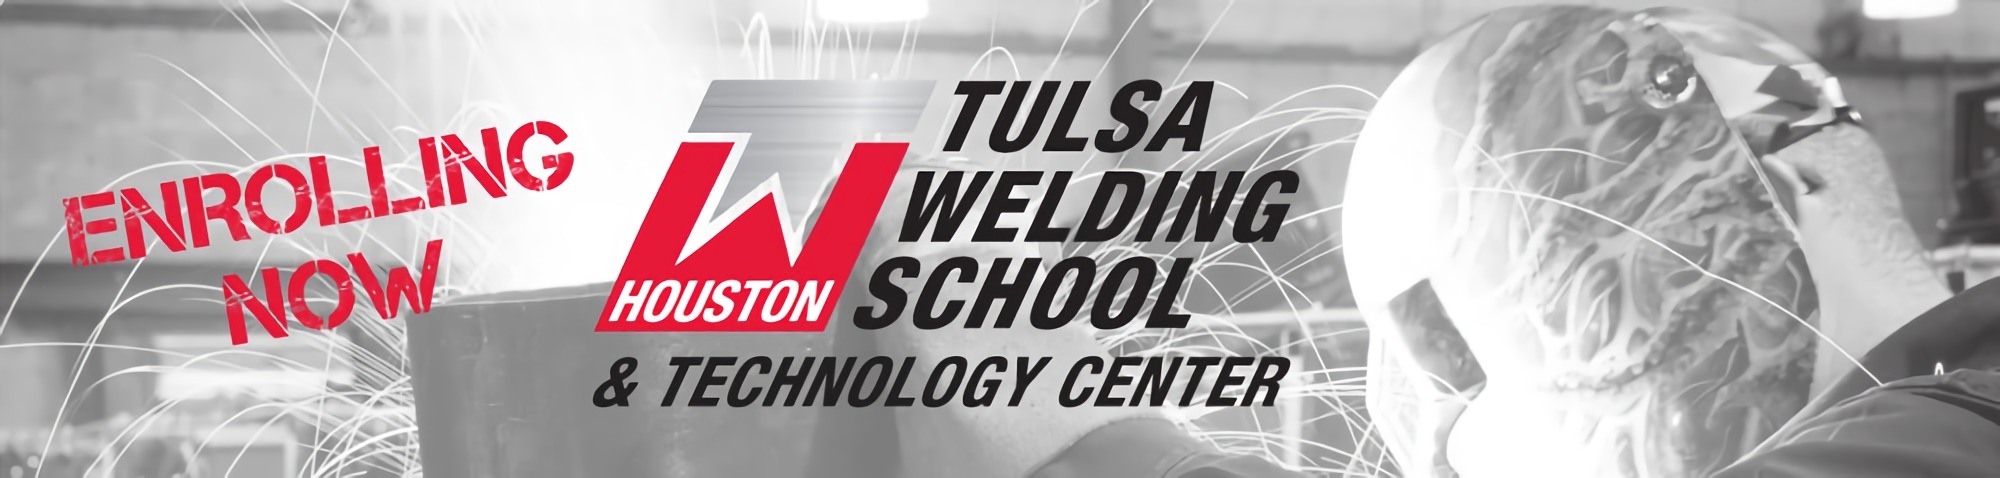 Tulsa Welding School and Technology Center Houston Texas